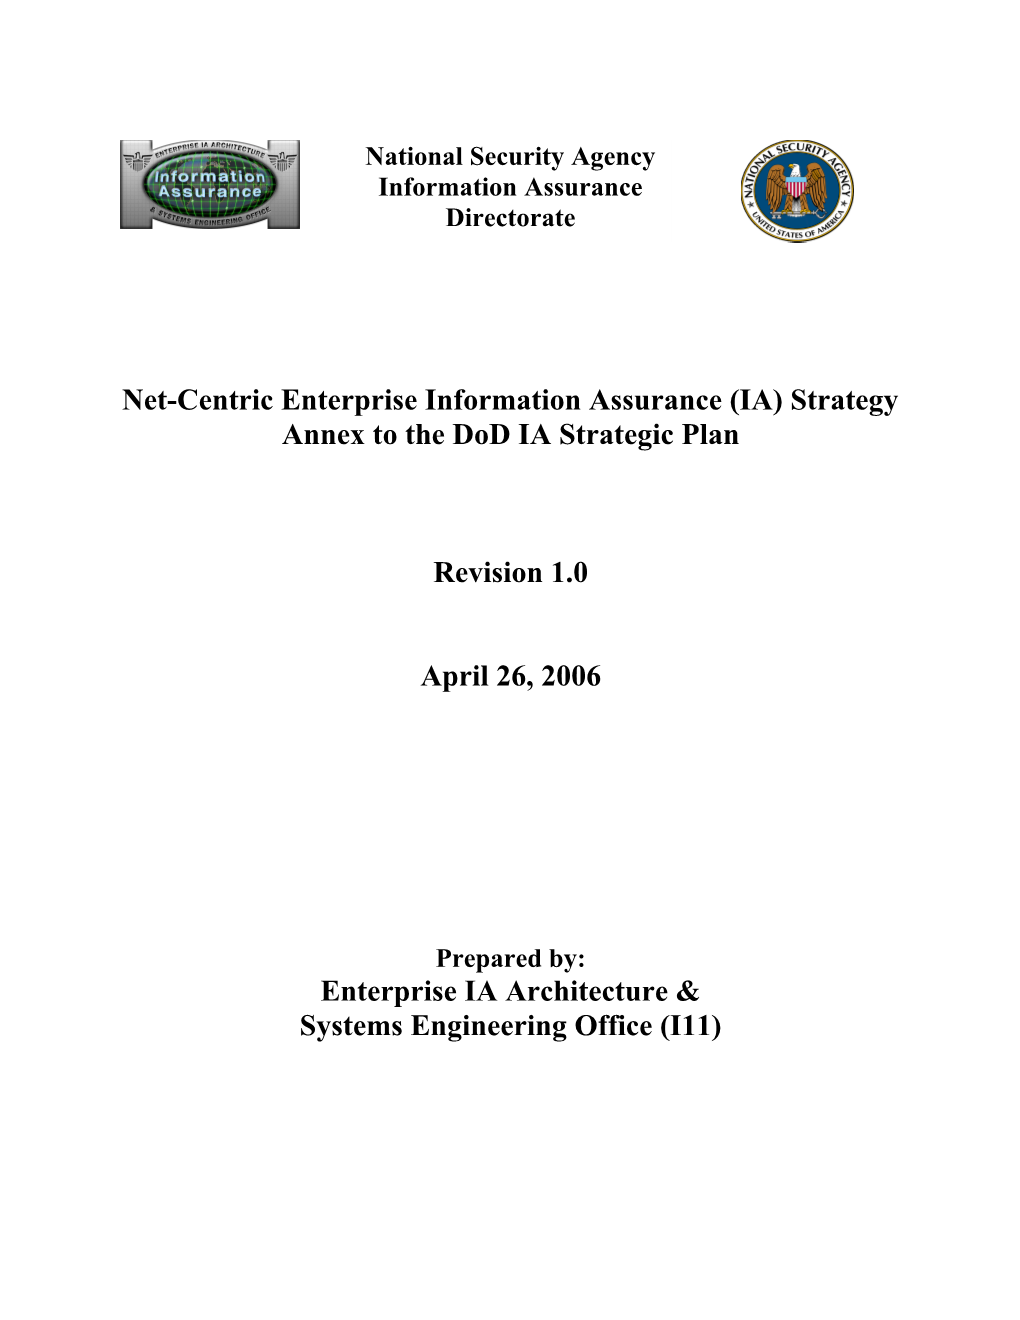 Net-Centric Enterprise IA Strategy